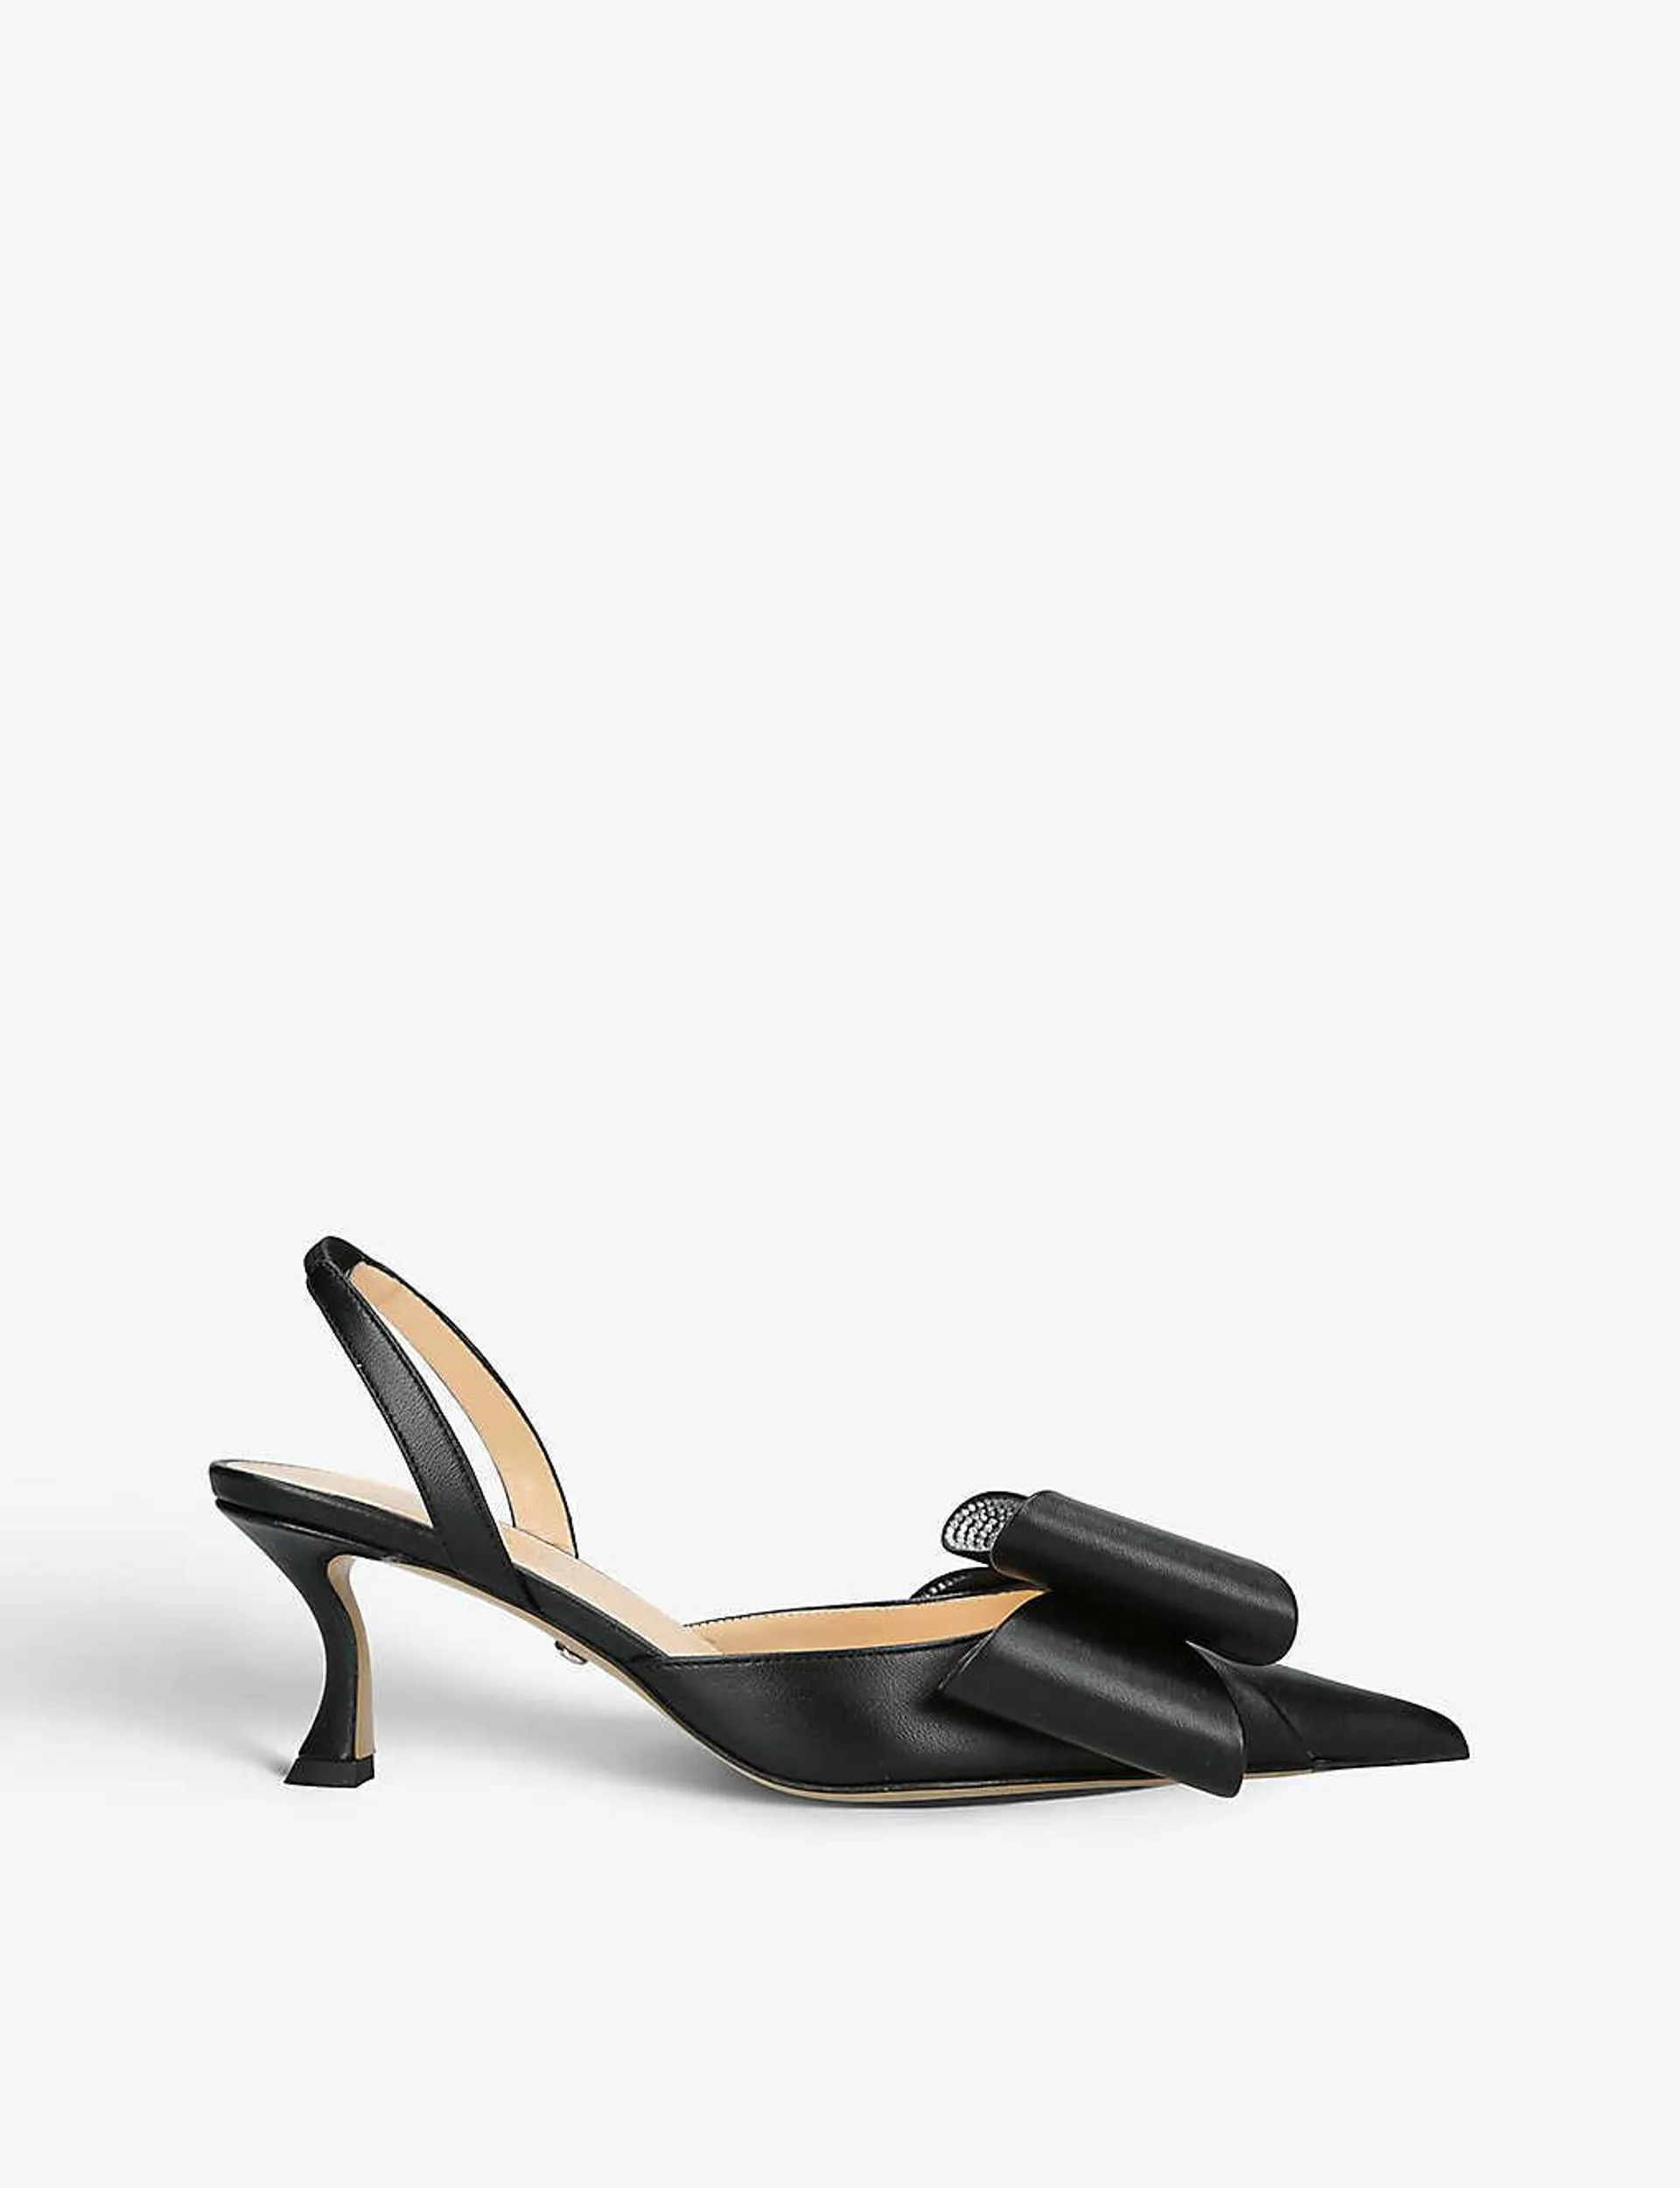 Le Cadeau pointed-toe leather slingback heeled courts